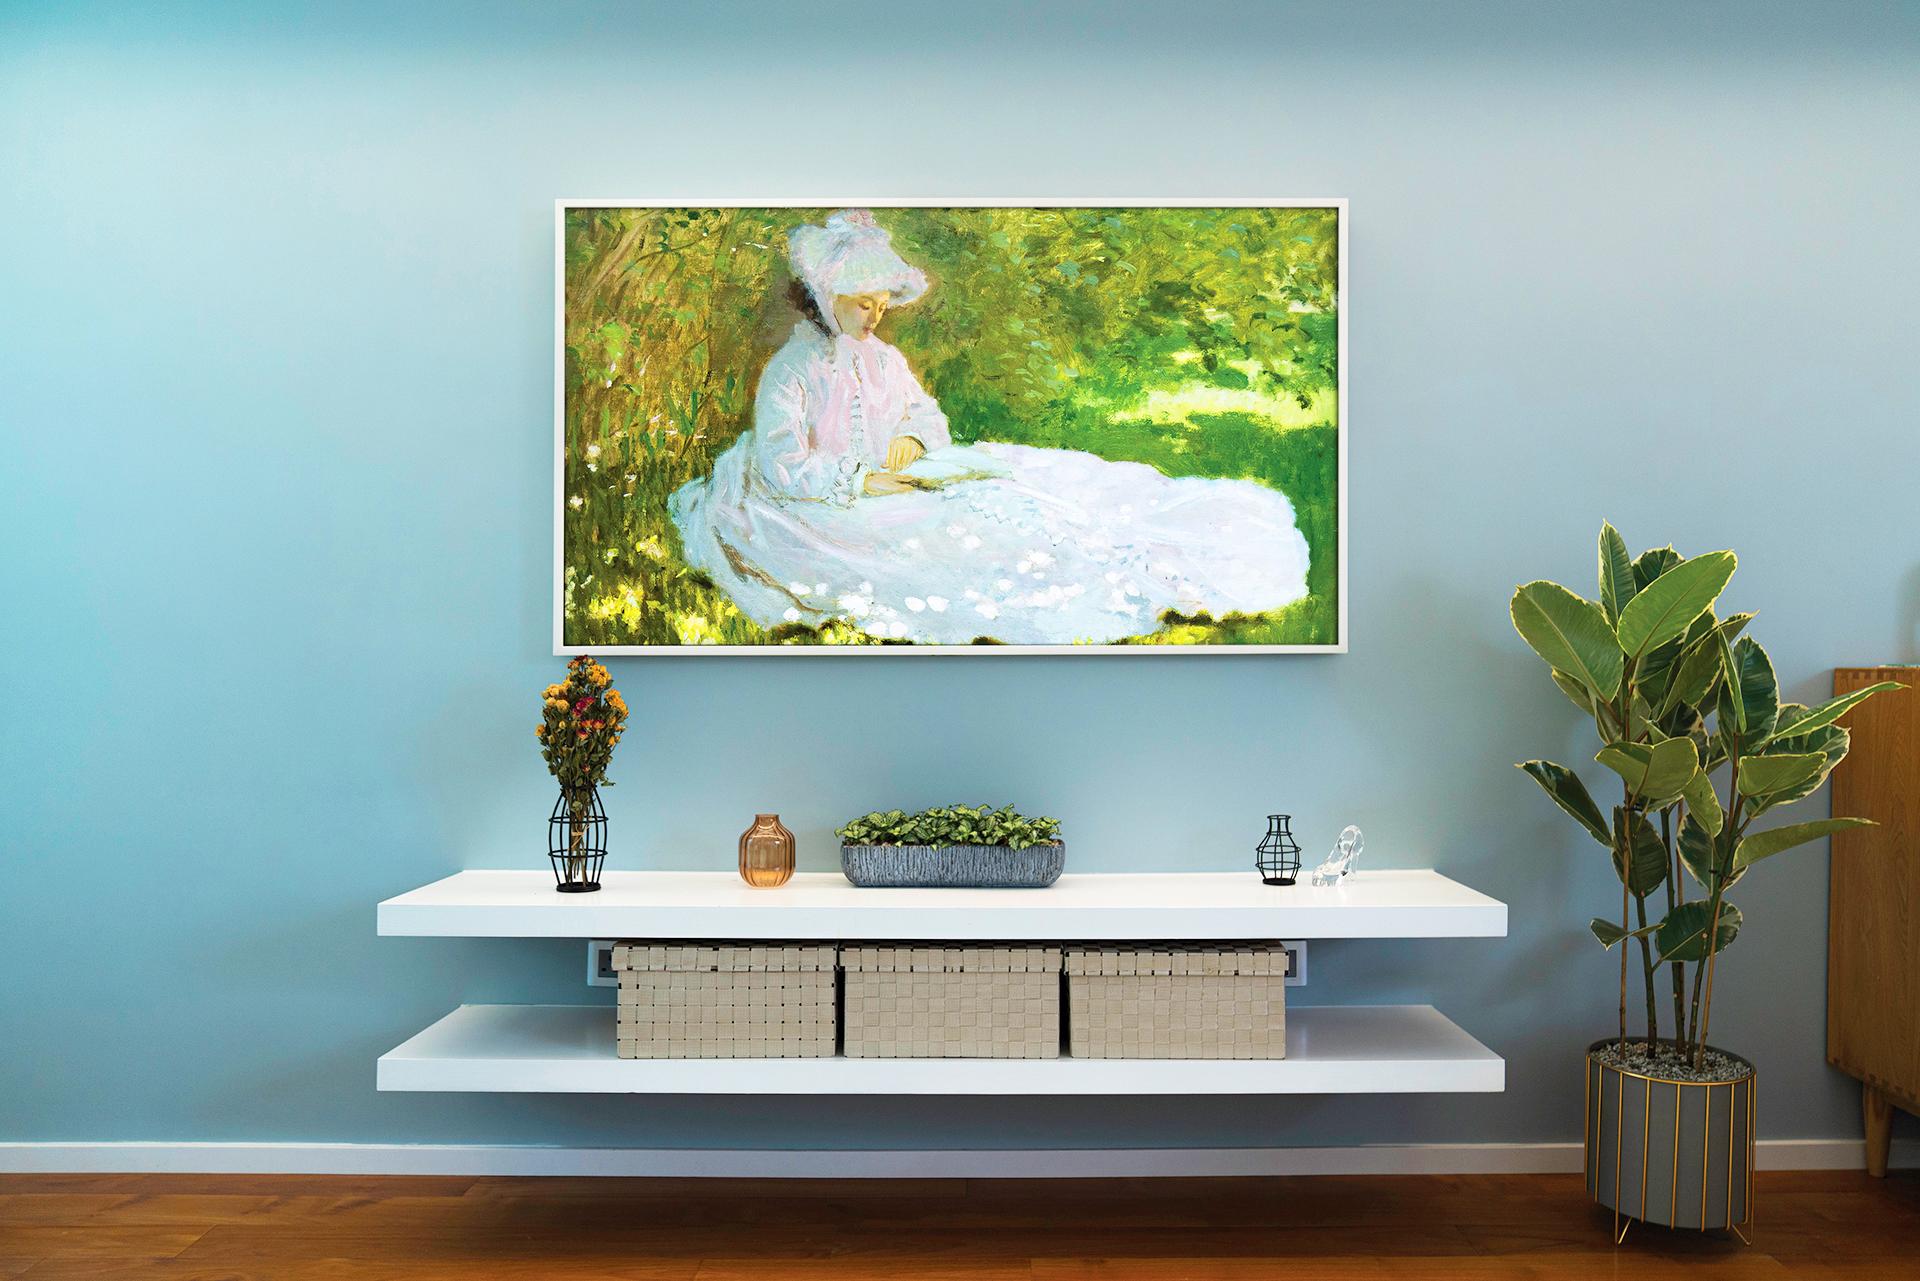 Samsung美學電視「The Frame」把家居幻化藝術畫廊，盡顯用家品味